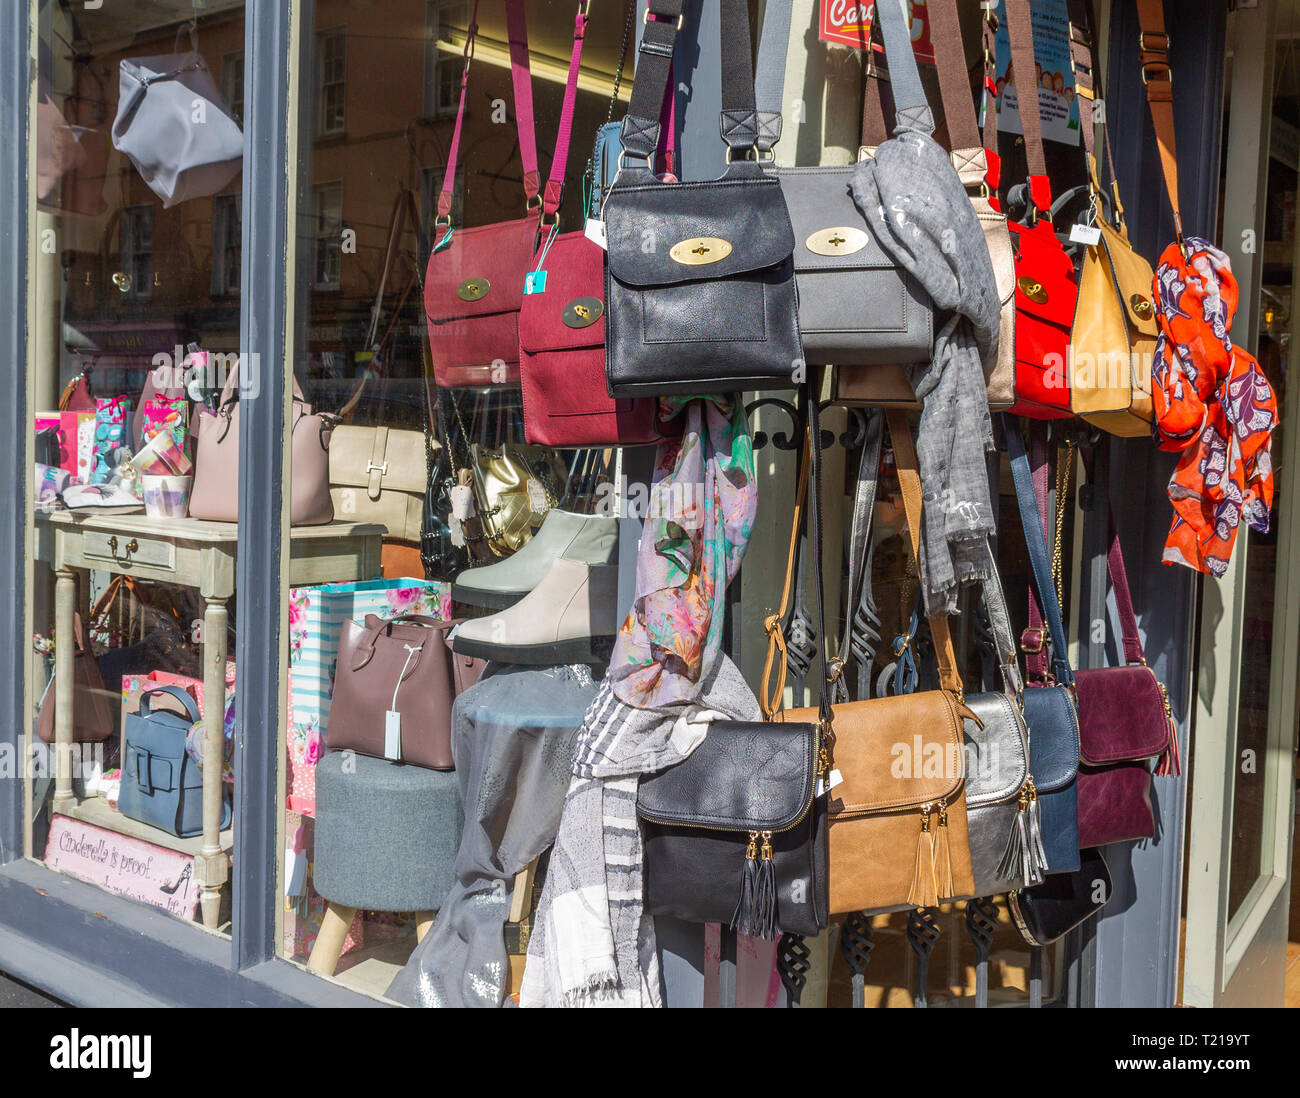 leather handbags hanging on display in shop window. Stock Photo